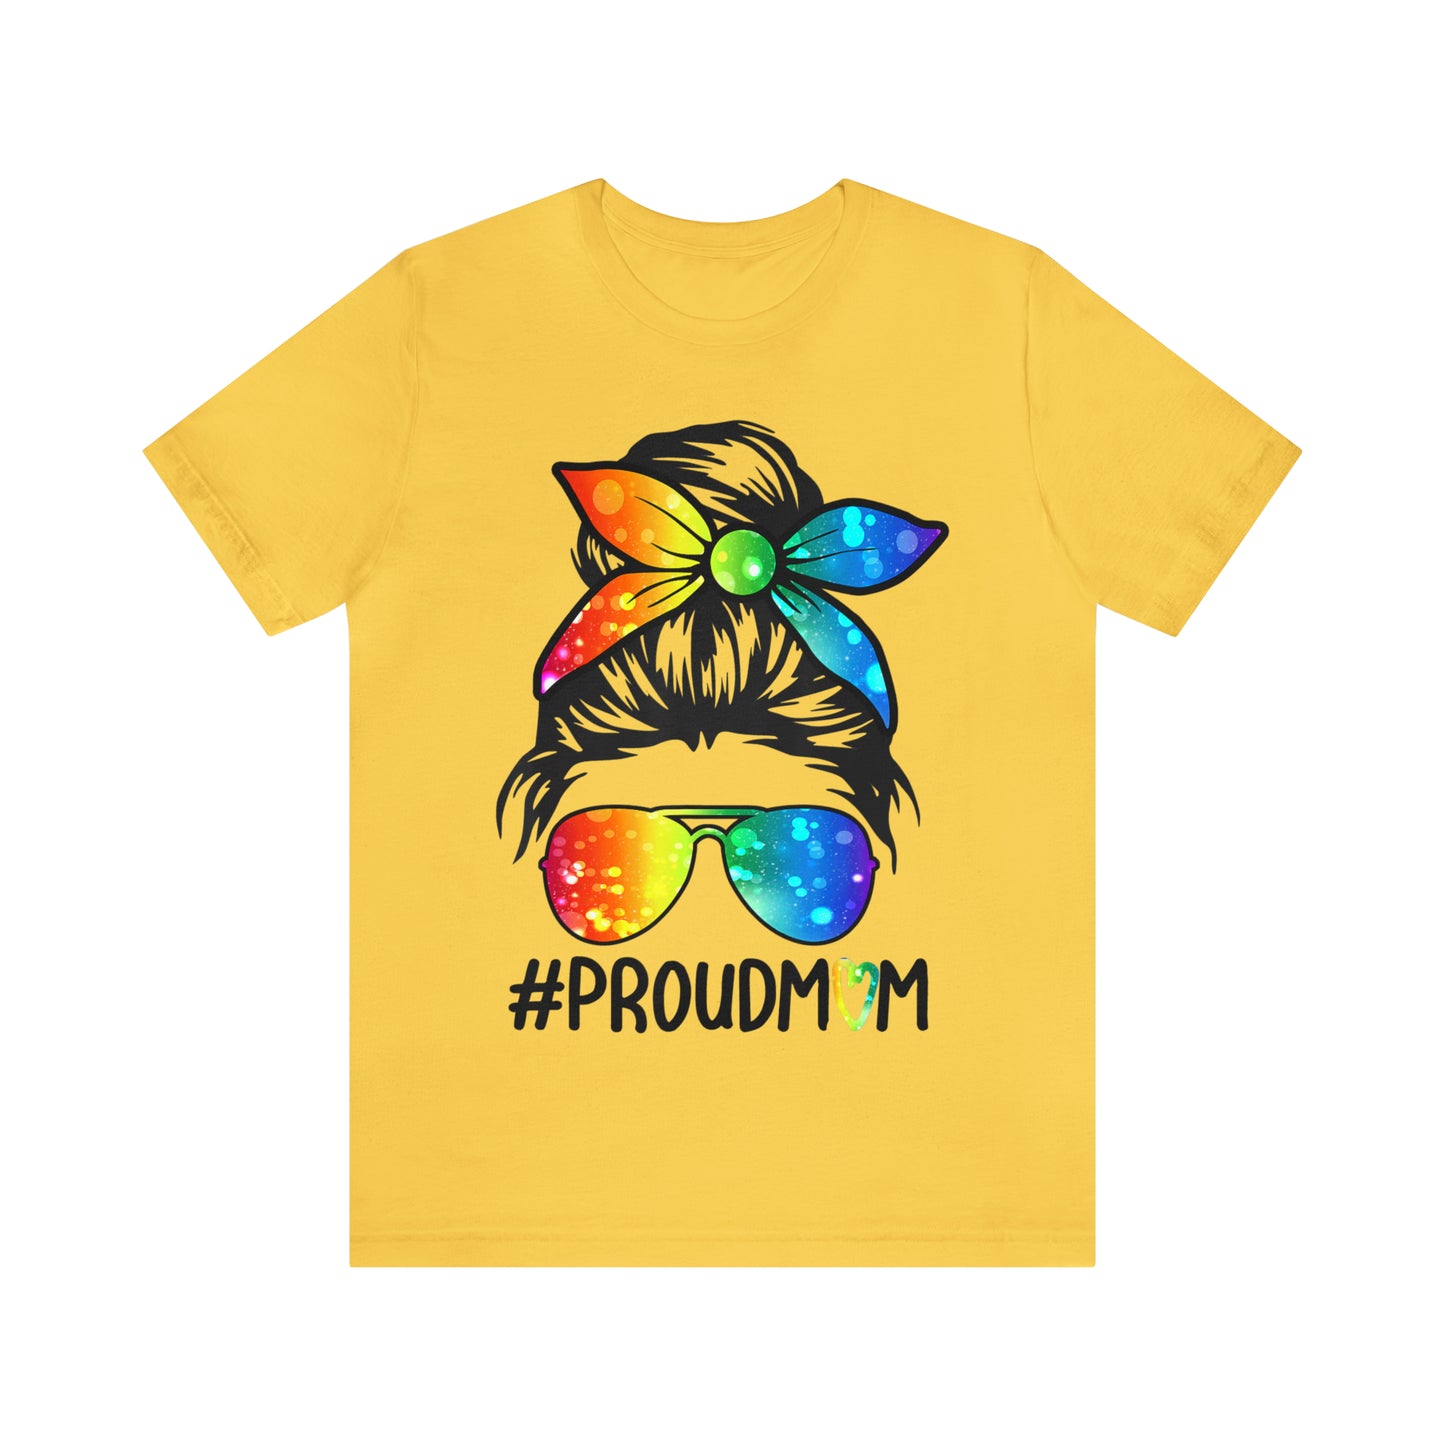 Proud Mom - Unisex T-Shirt